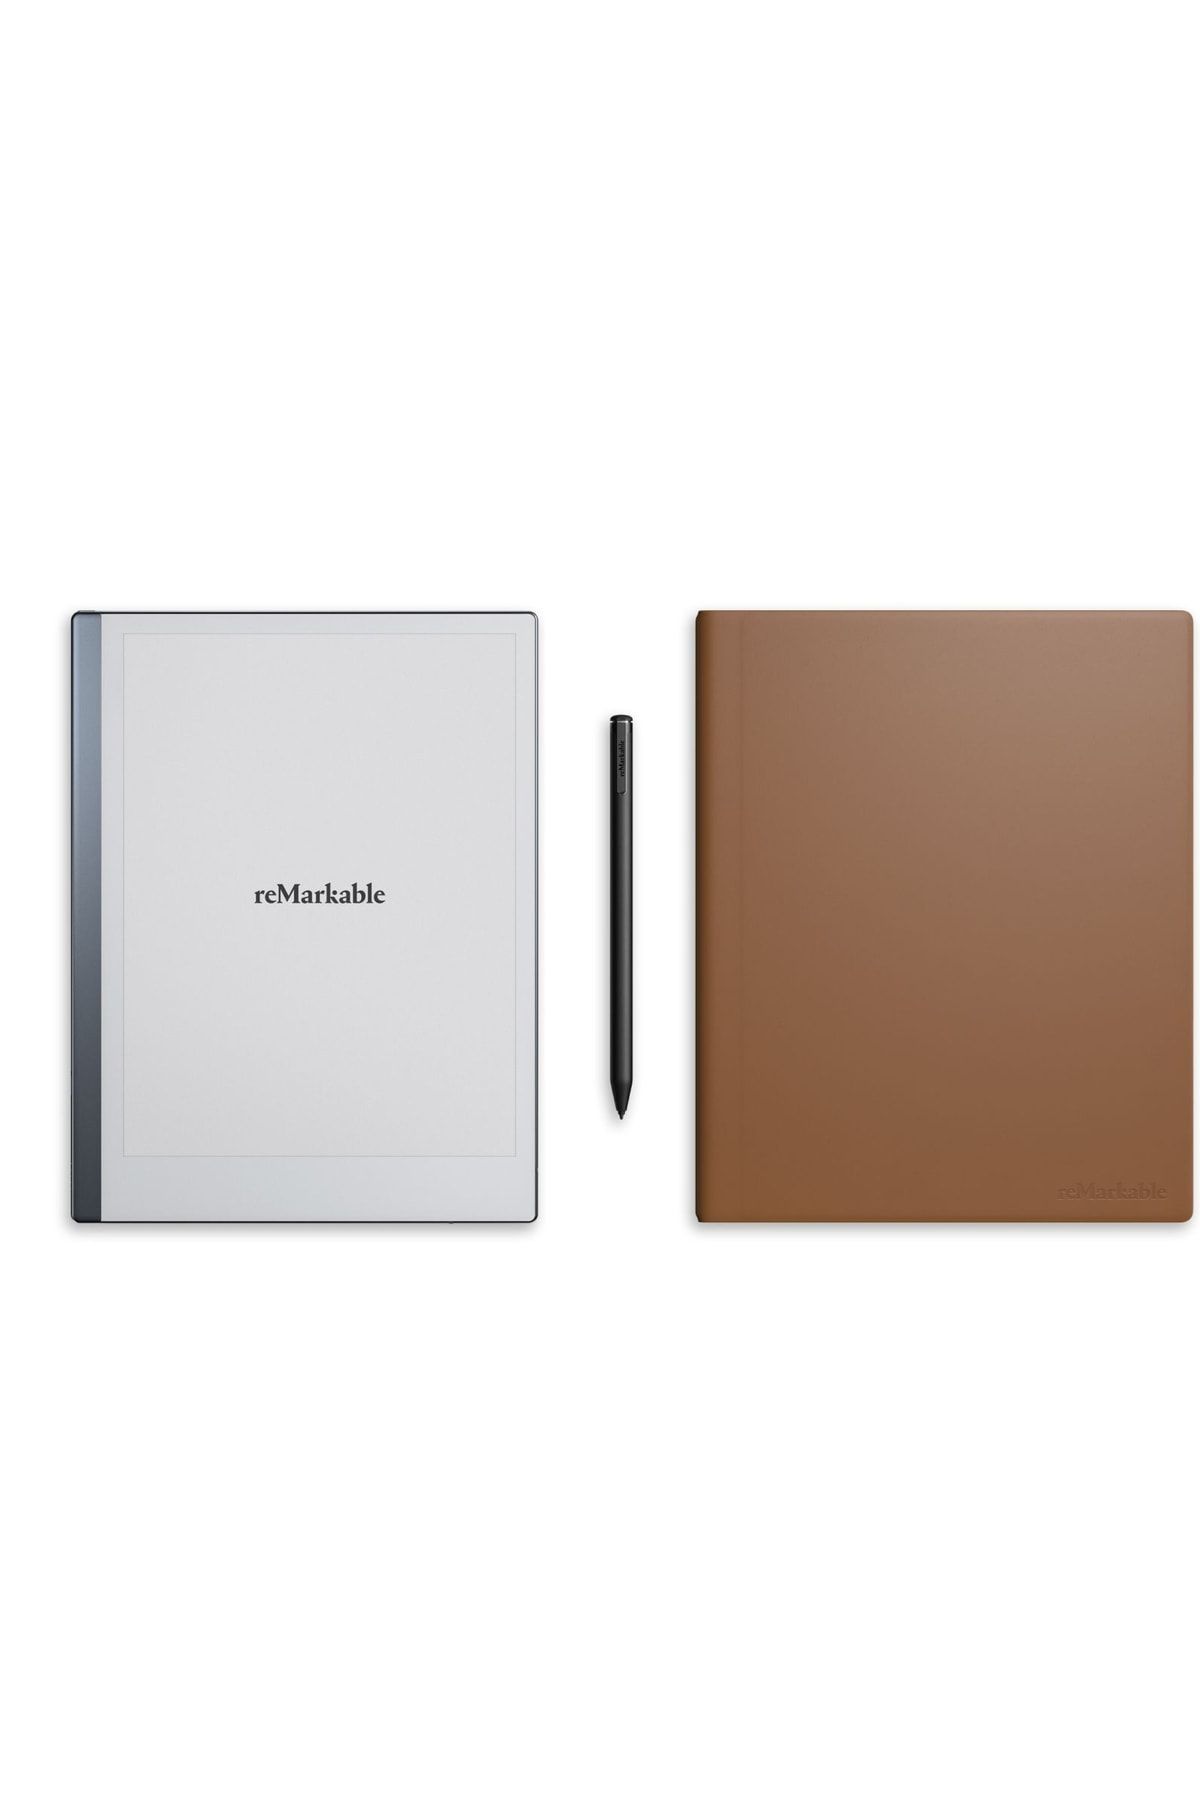 remarkable 2 Digital Paper Tablet + Marker Plus + Kapaklı Kahverengi Kılıf